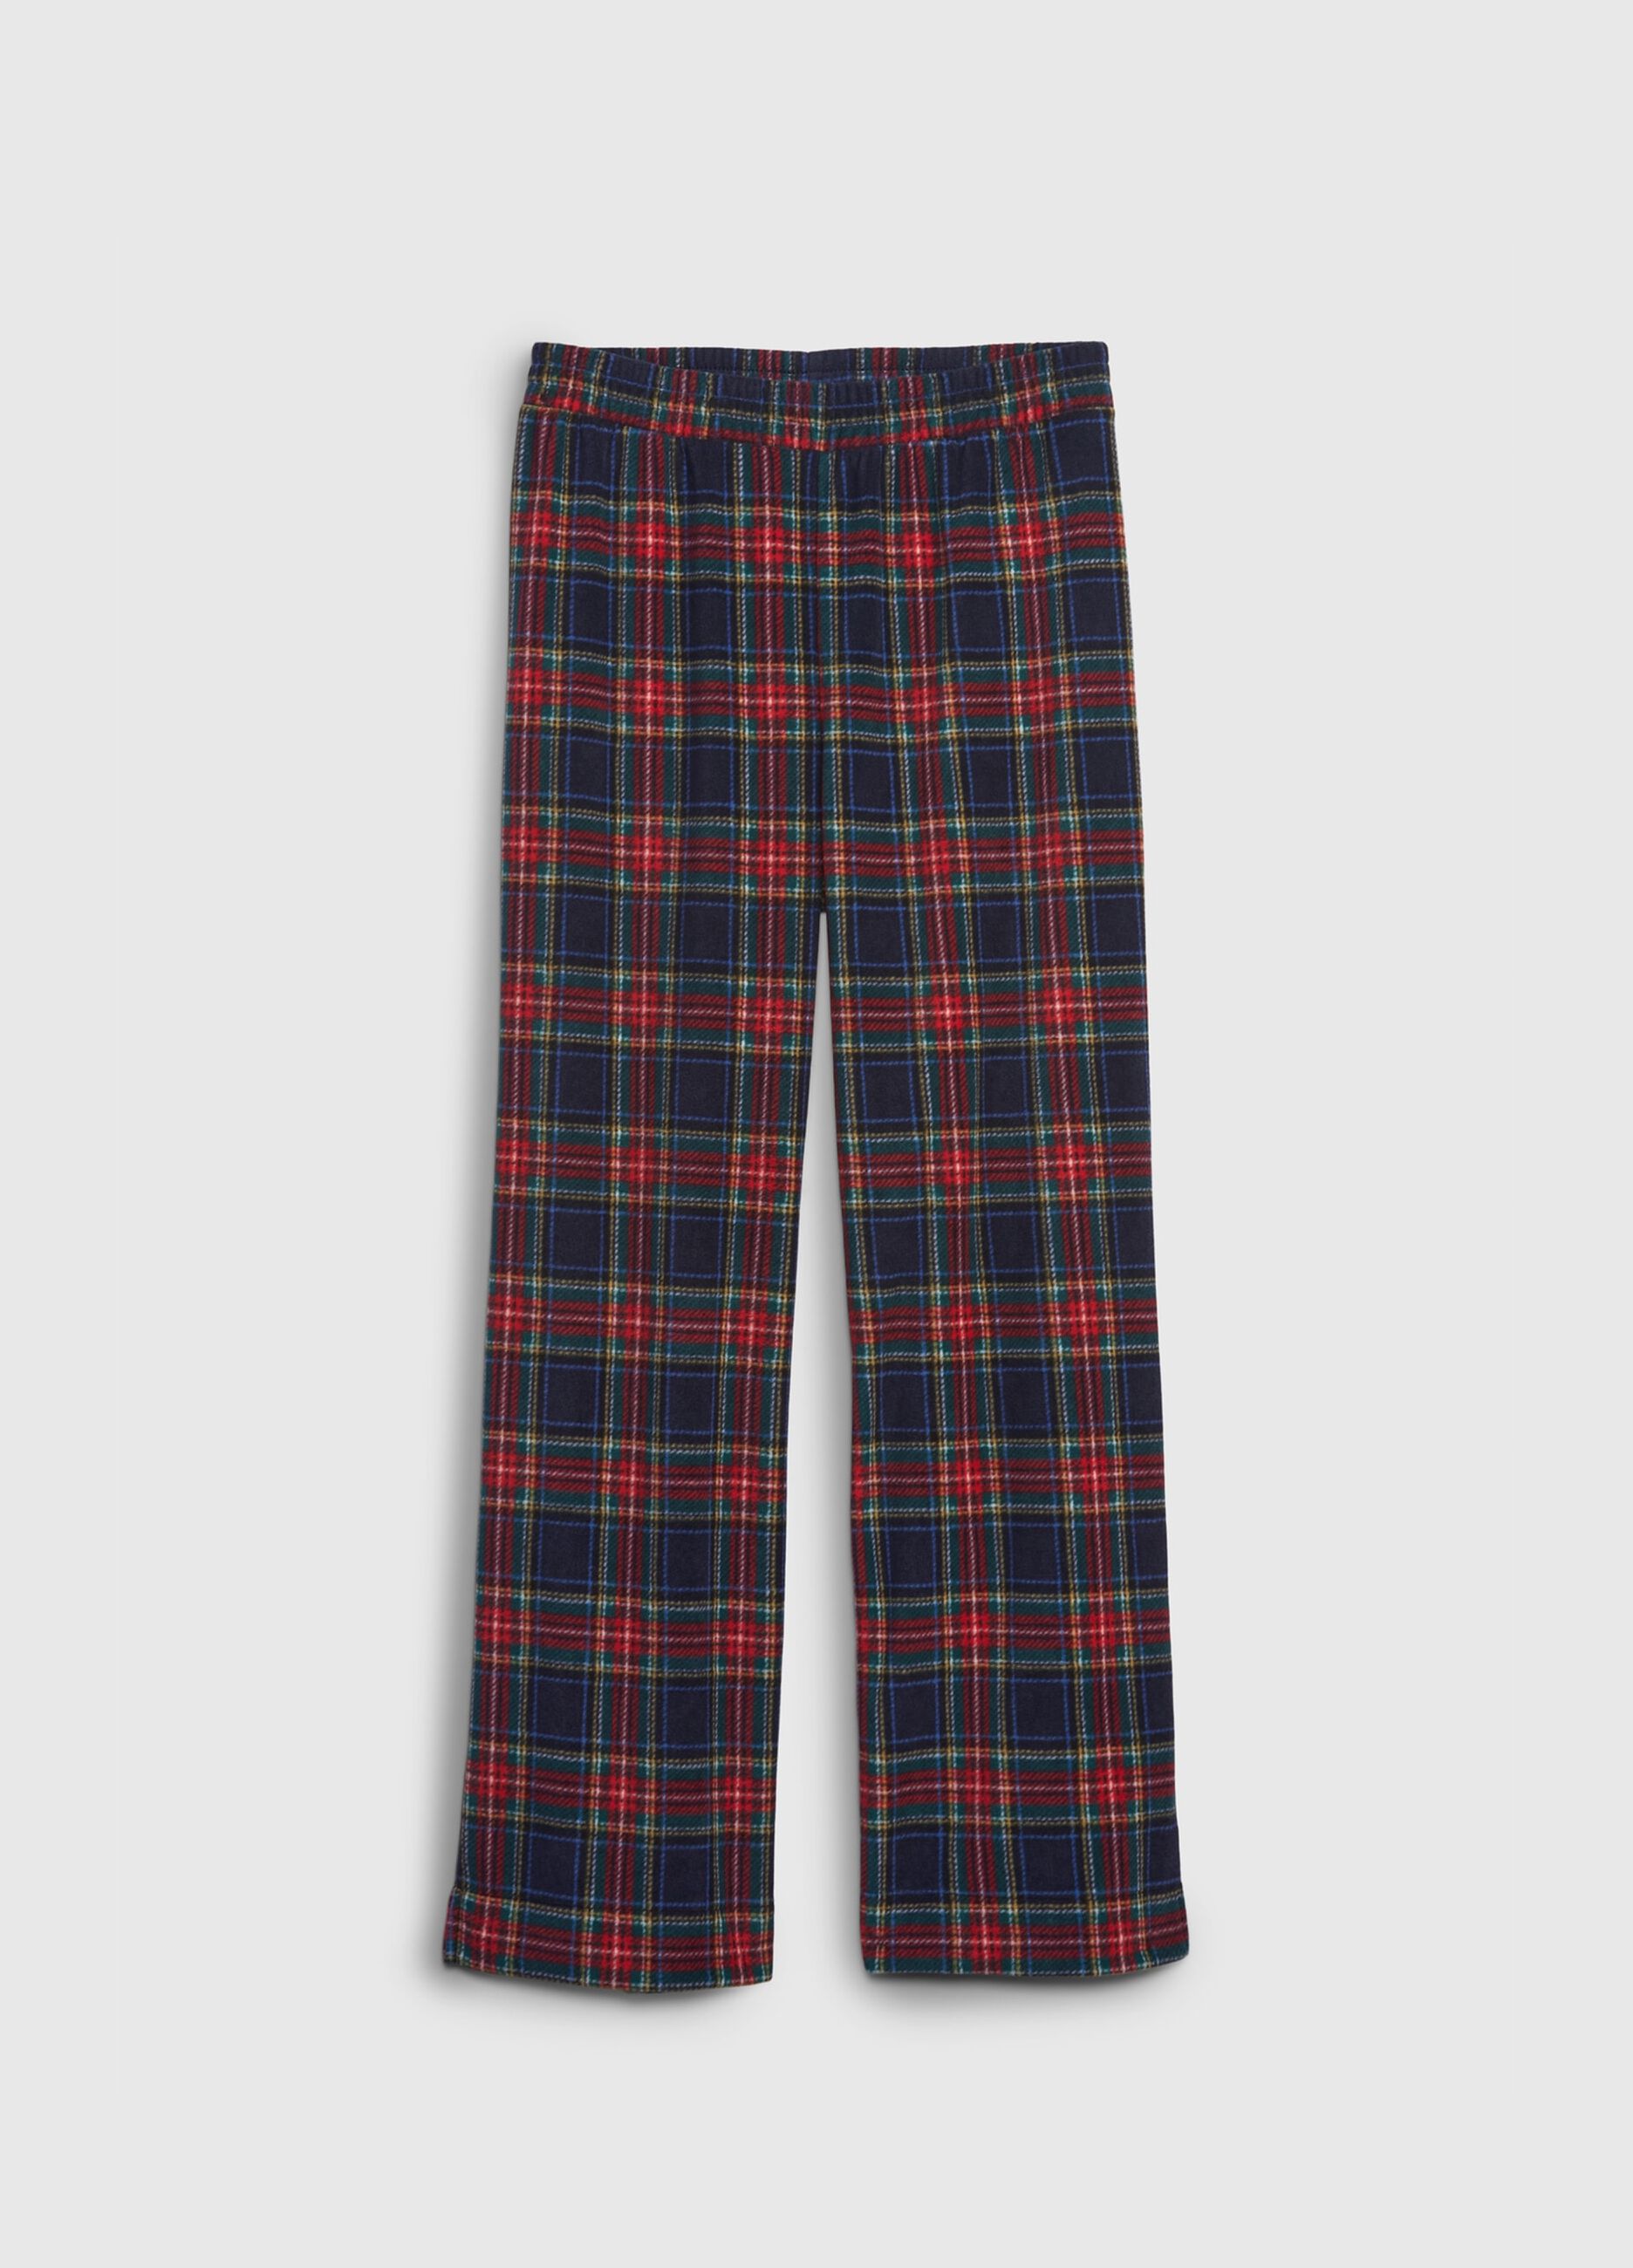 Full-length tartan pyjama bottoms